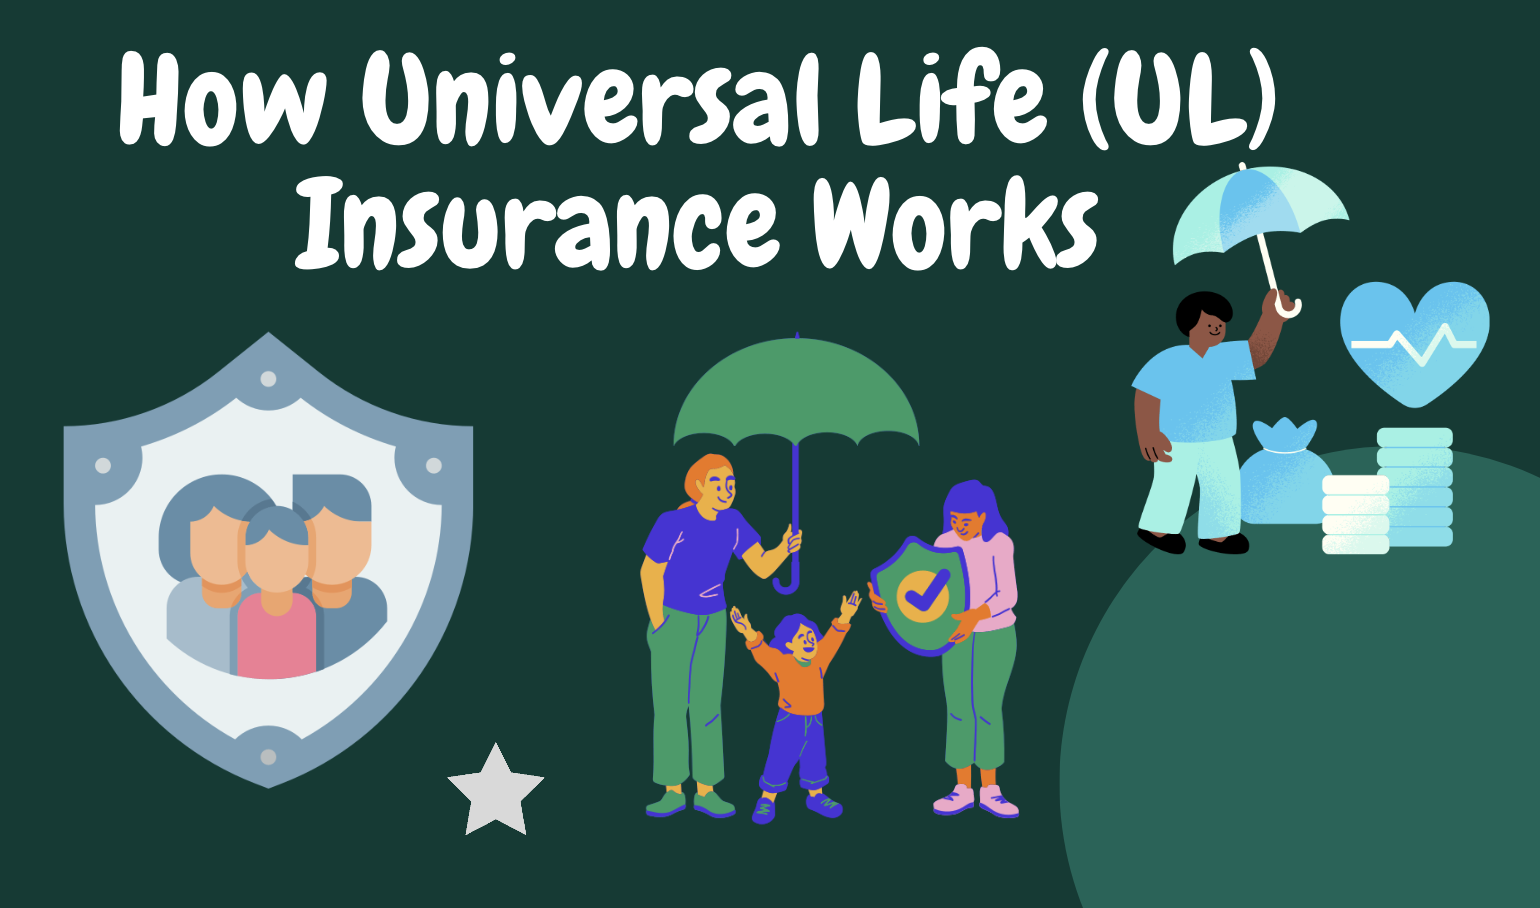 Universal Life (UL) Insurance